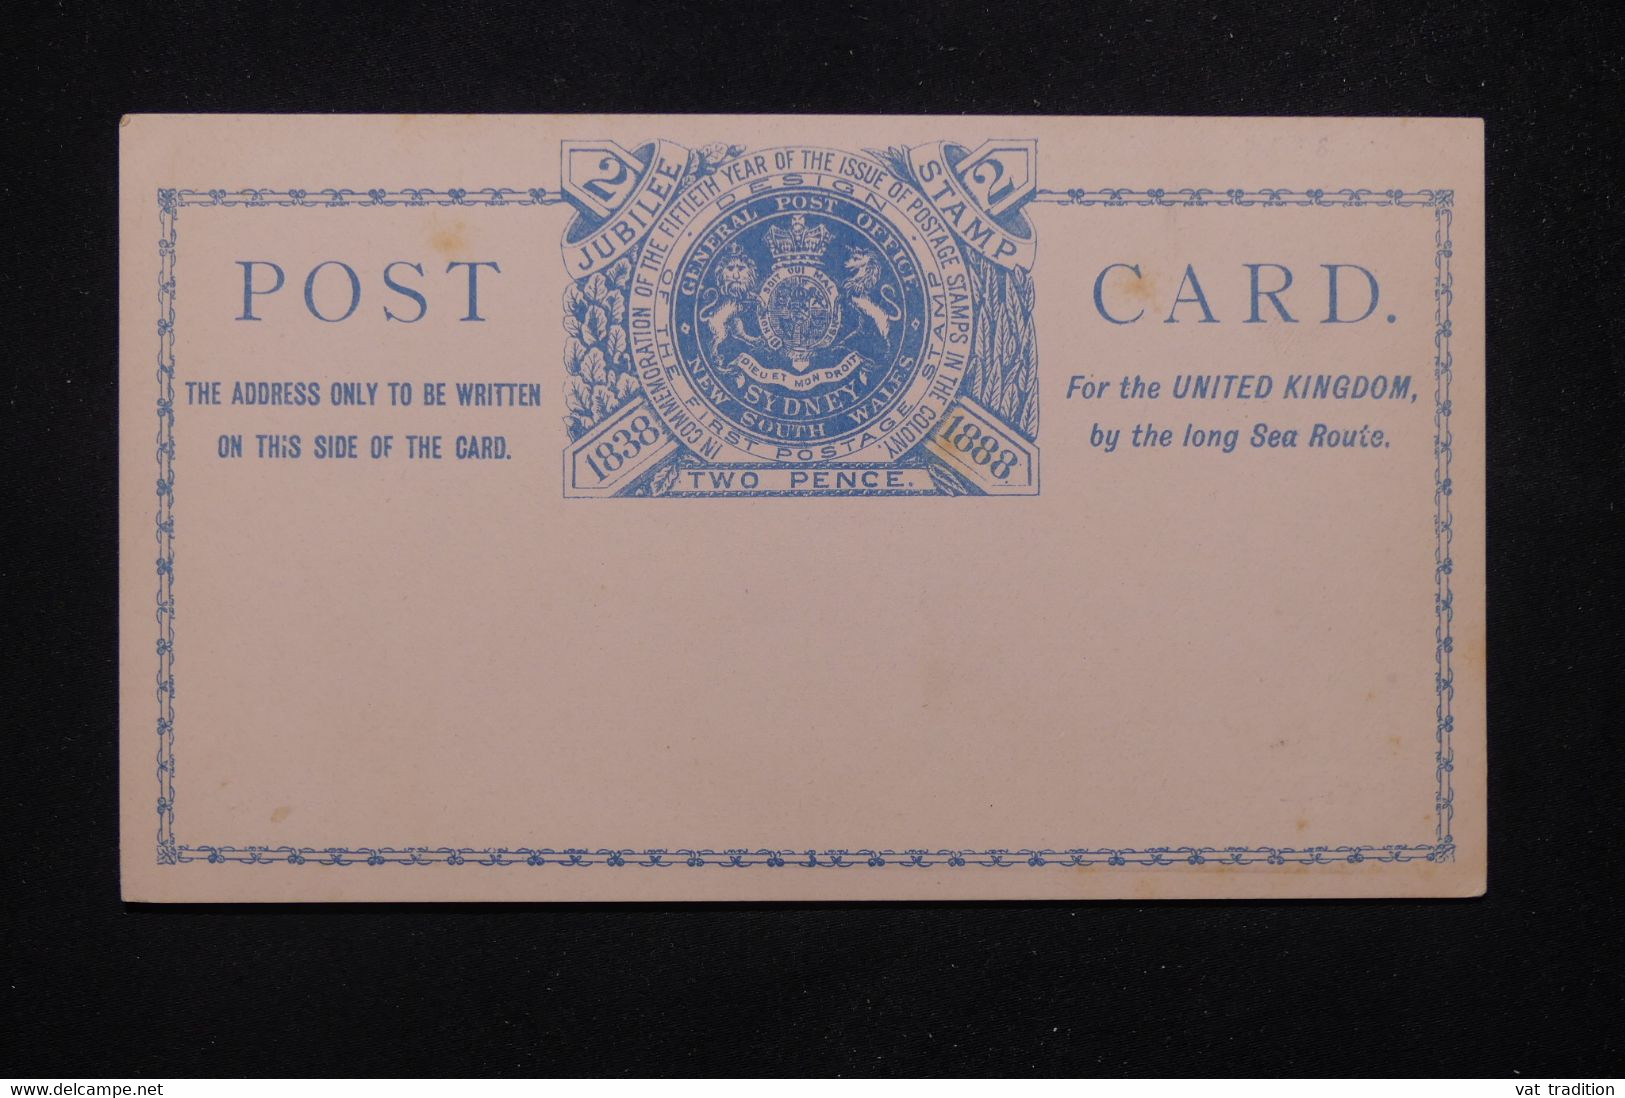 NEW SOUTH WALES - Entier Postal ( Carte ) Du Jubilée De 1888 Non Circulé - L 80775 - Briefe U. Dokumente